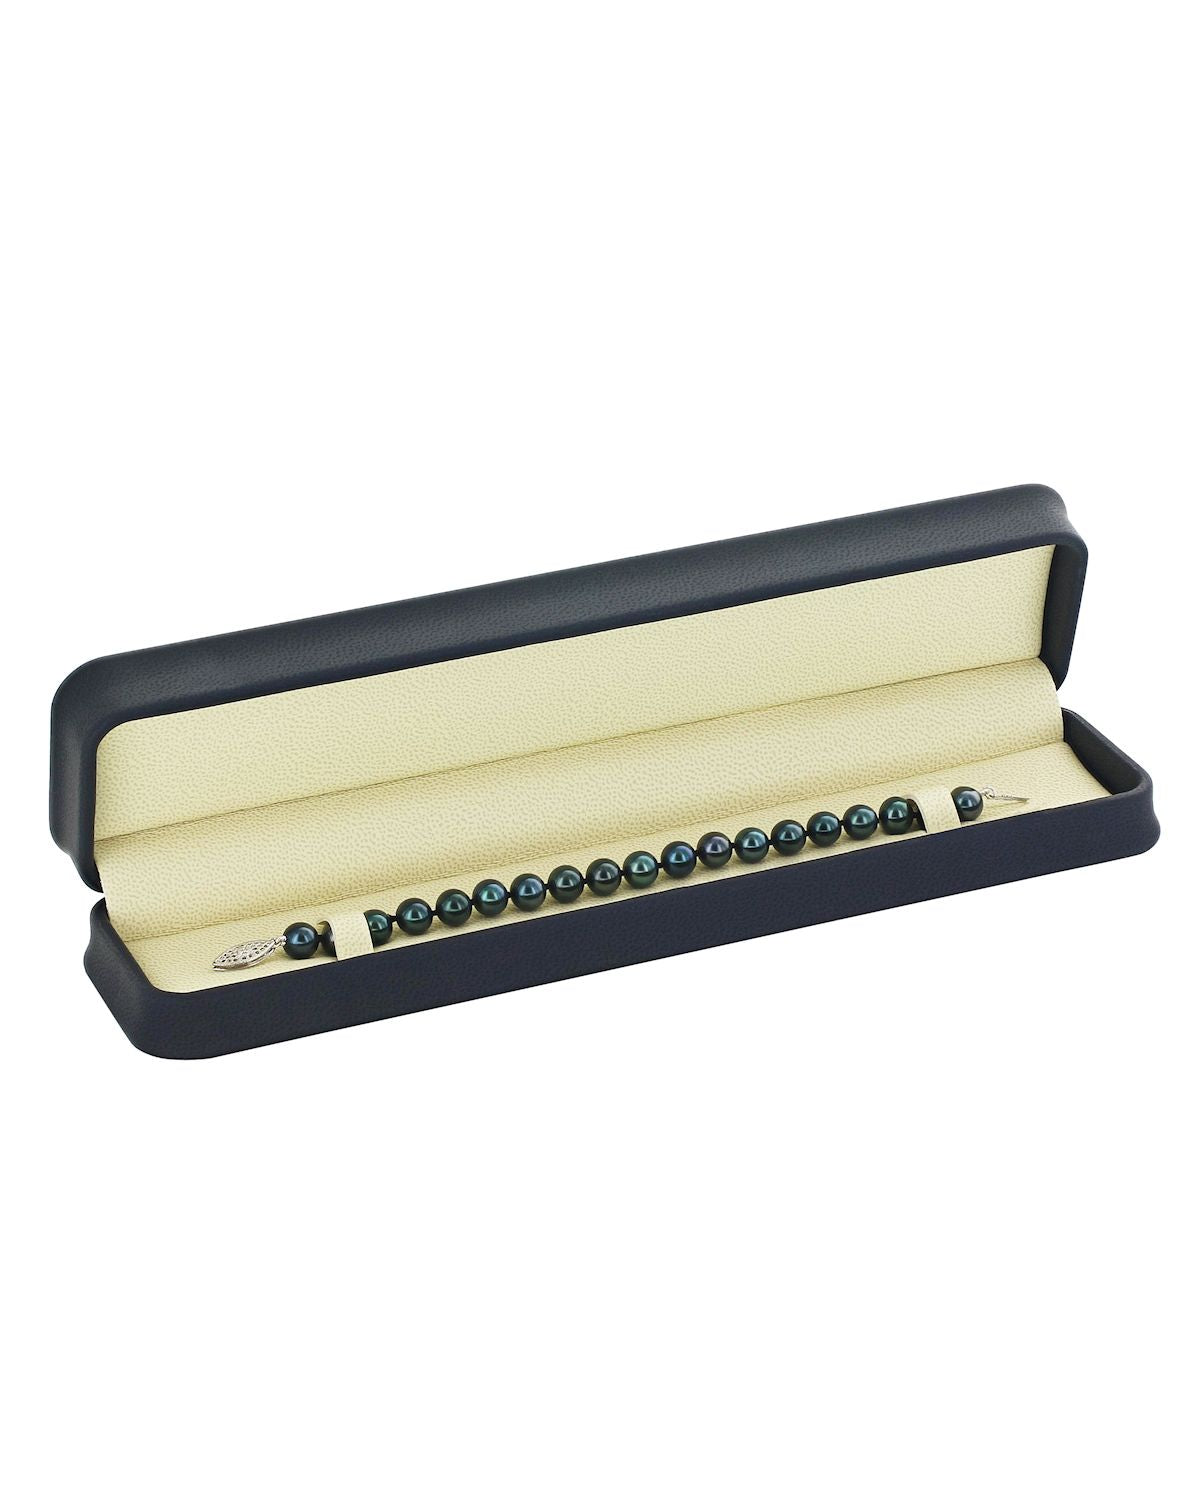 7.5-8.0mm Akoya Black Pearl Bracelet- Choose Your Quality - Third Image